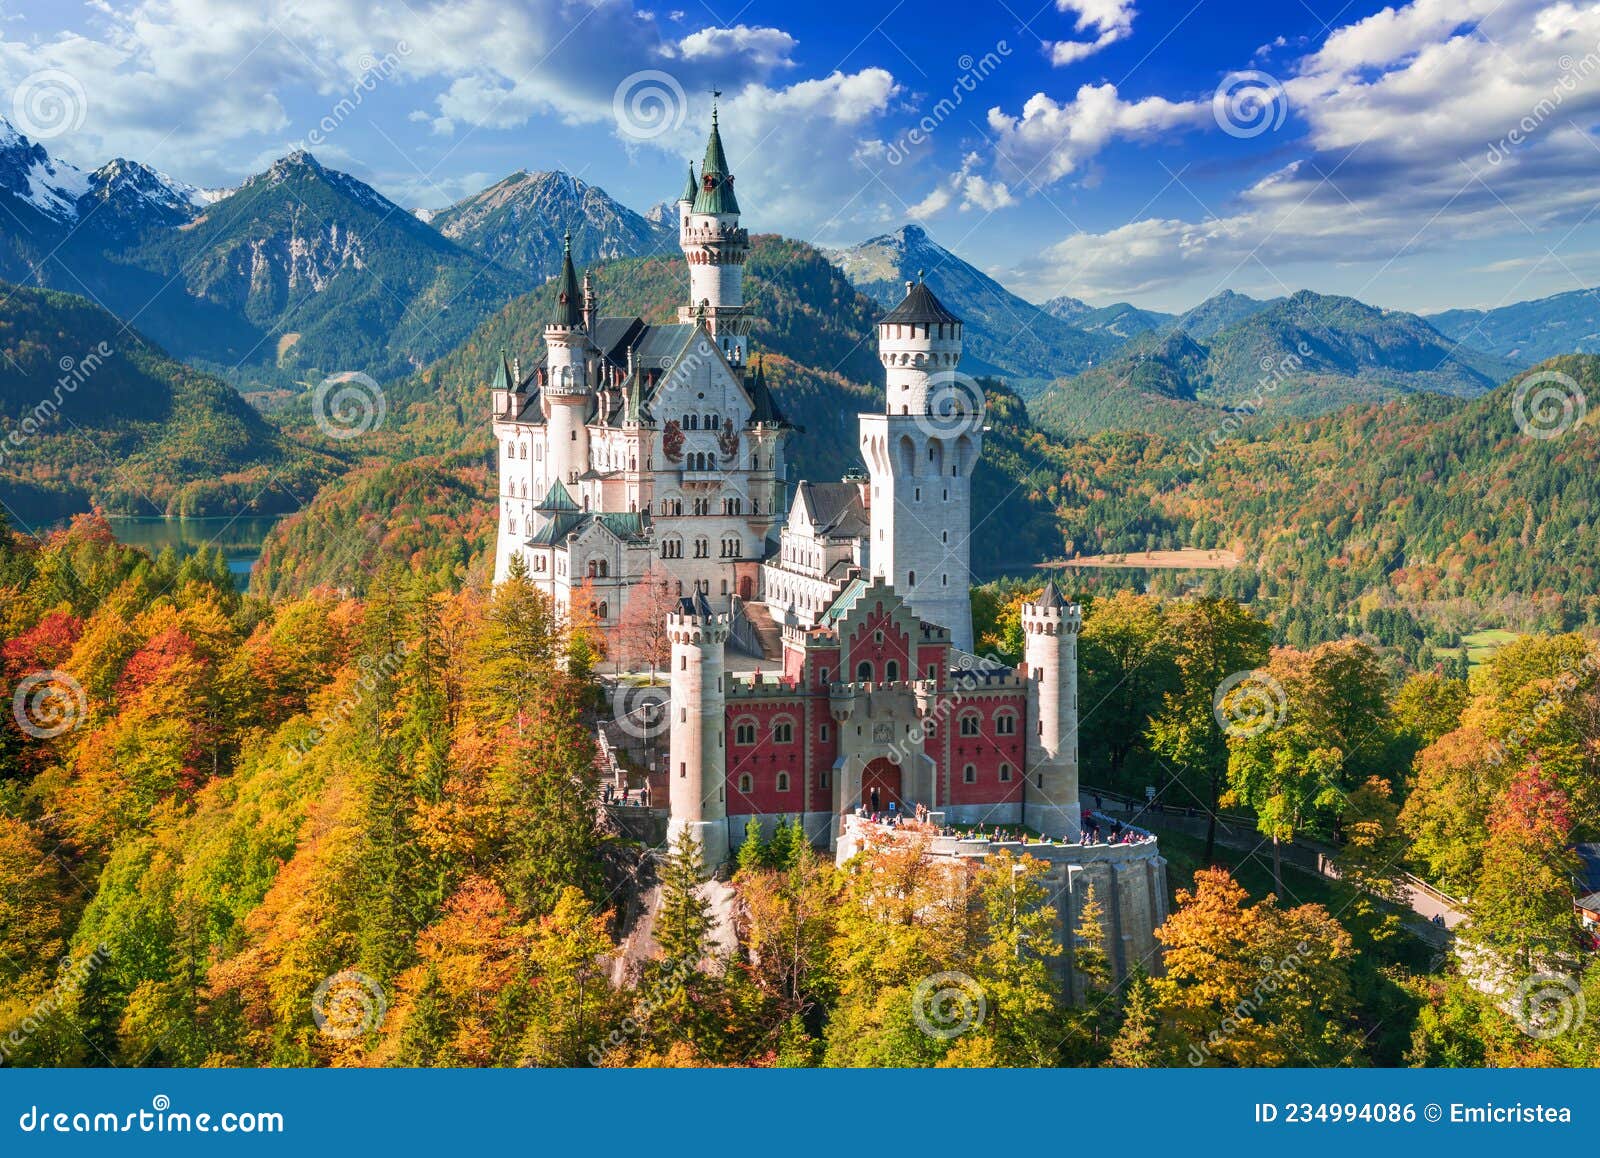 neuschwanstein, bavaria - famous bavarian fairytale castle autum